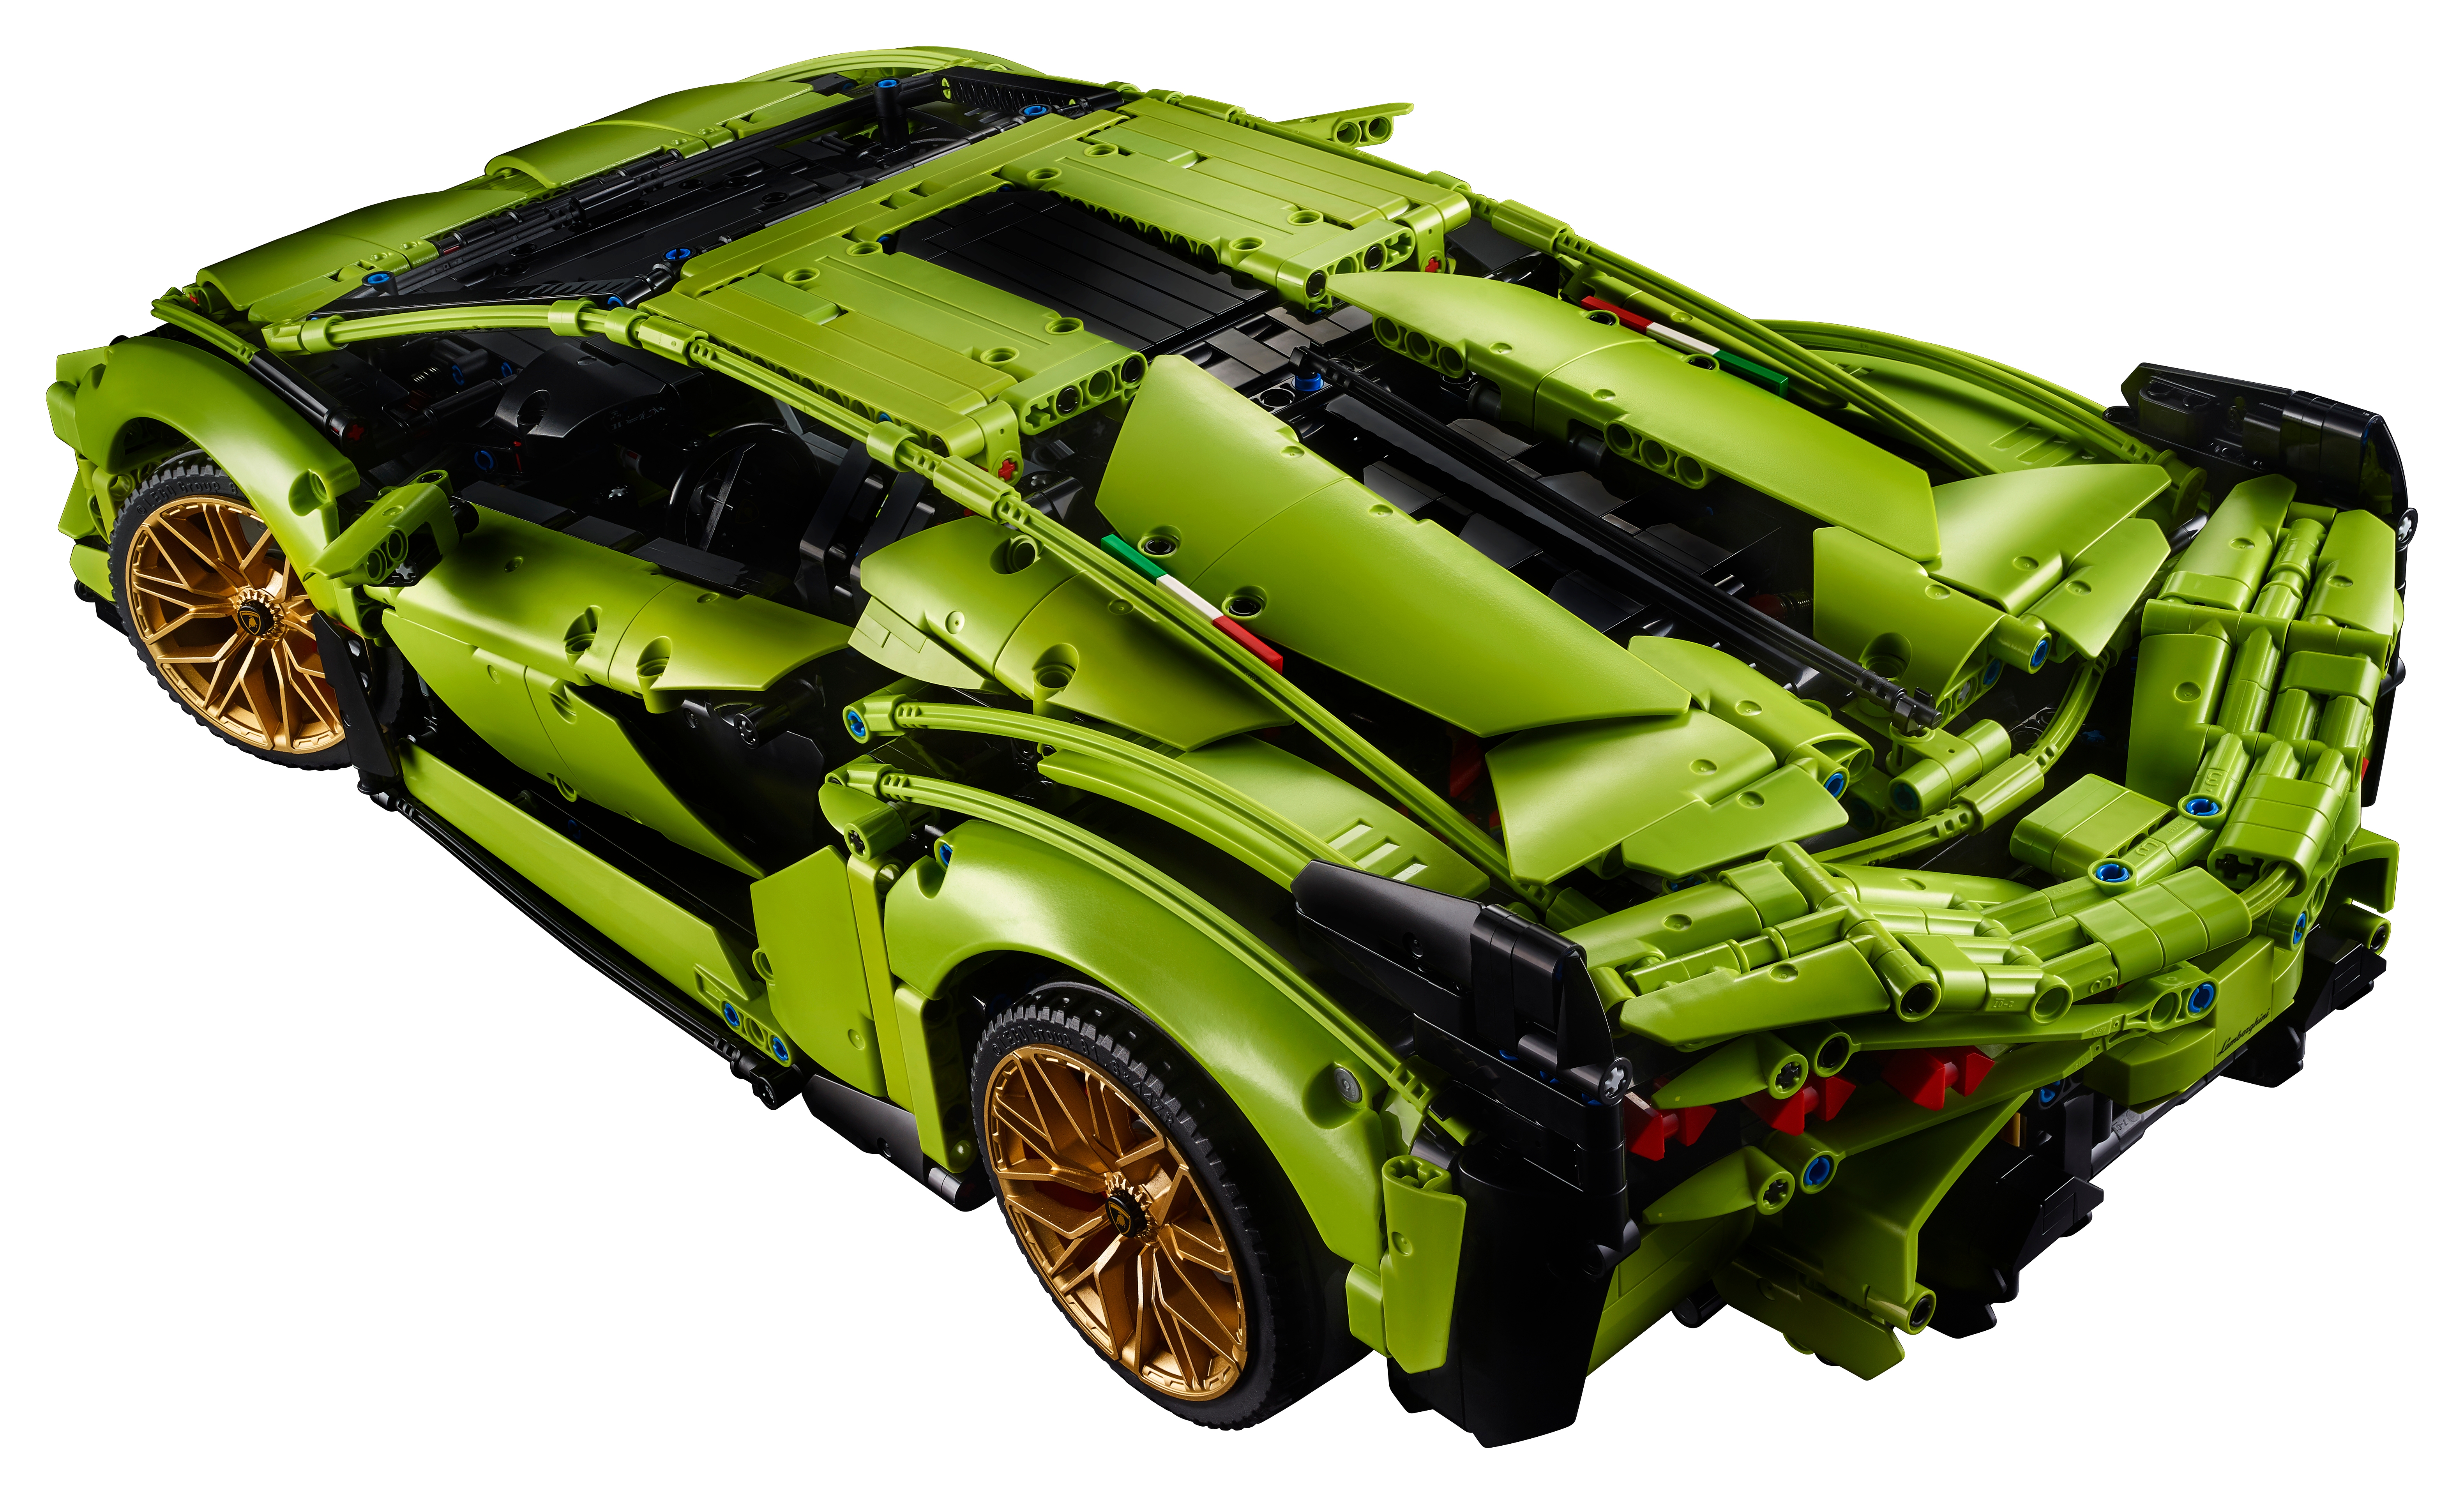 Technic+Lamborghini+Black+FKP+37+(+NEW+42115+)+Building+blocks+SHIPPING+WORLDWIDE+DHL